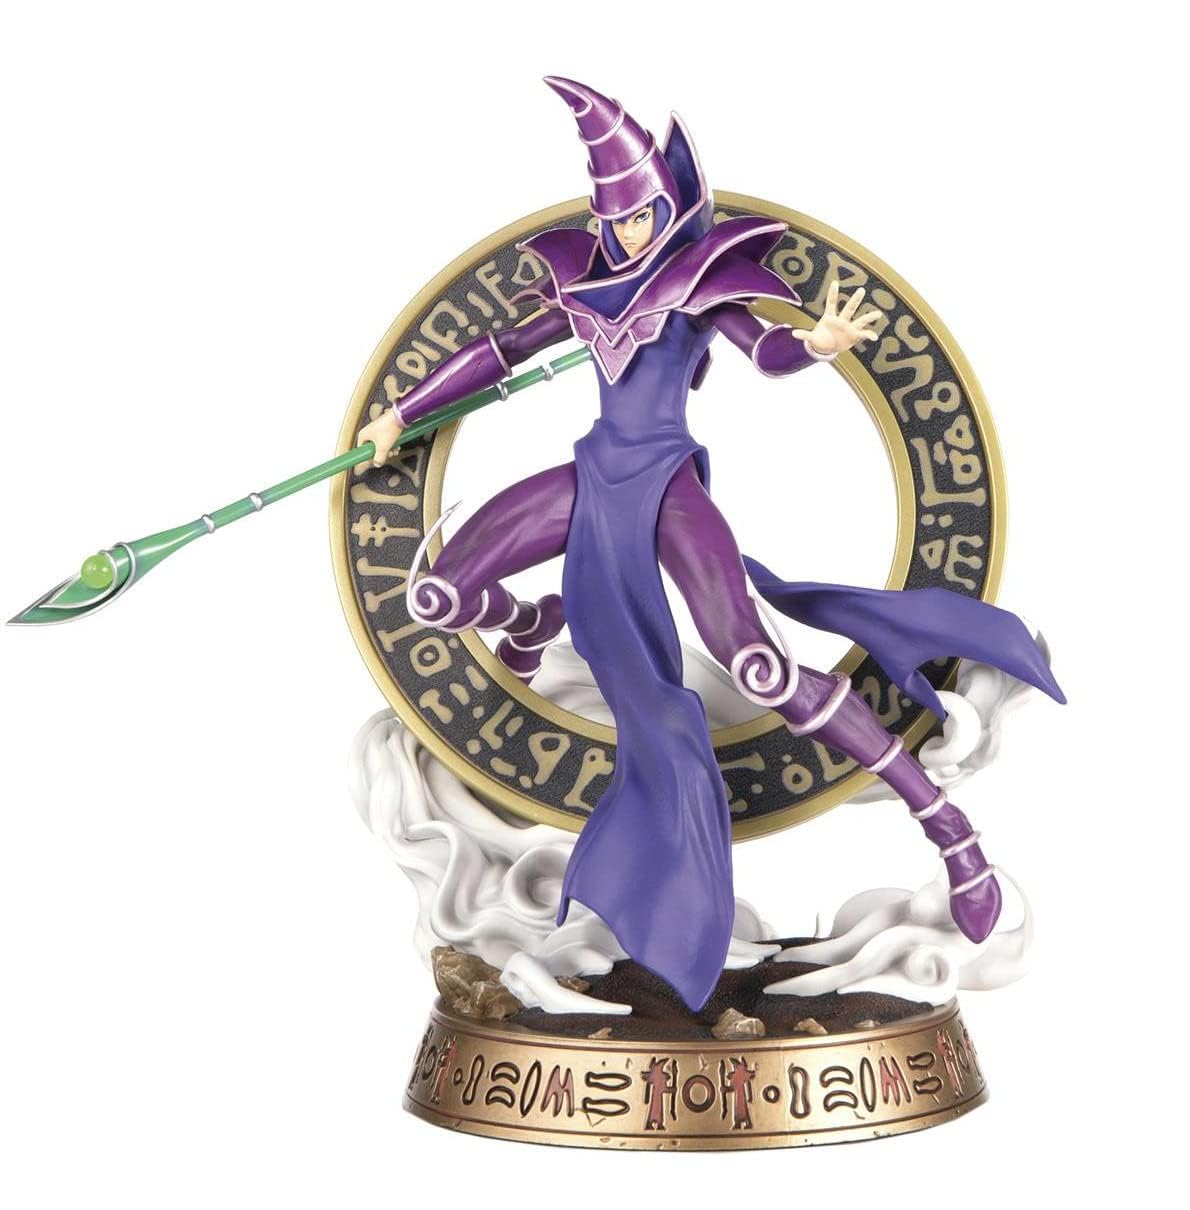 Yu-Gi-Oh! Dark Magician Purple 12-Inch Statue